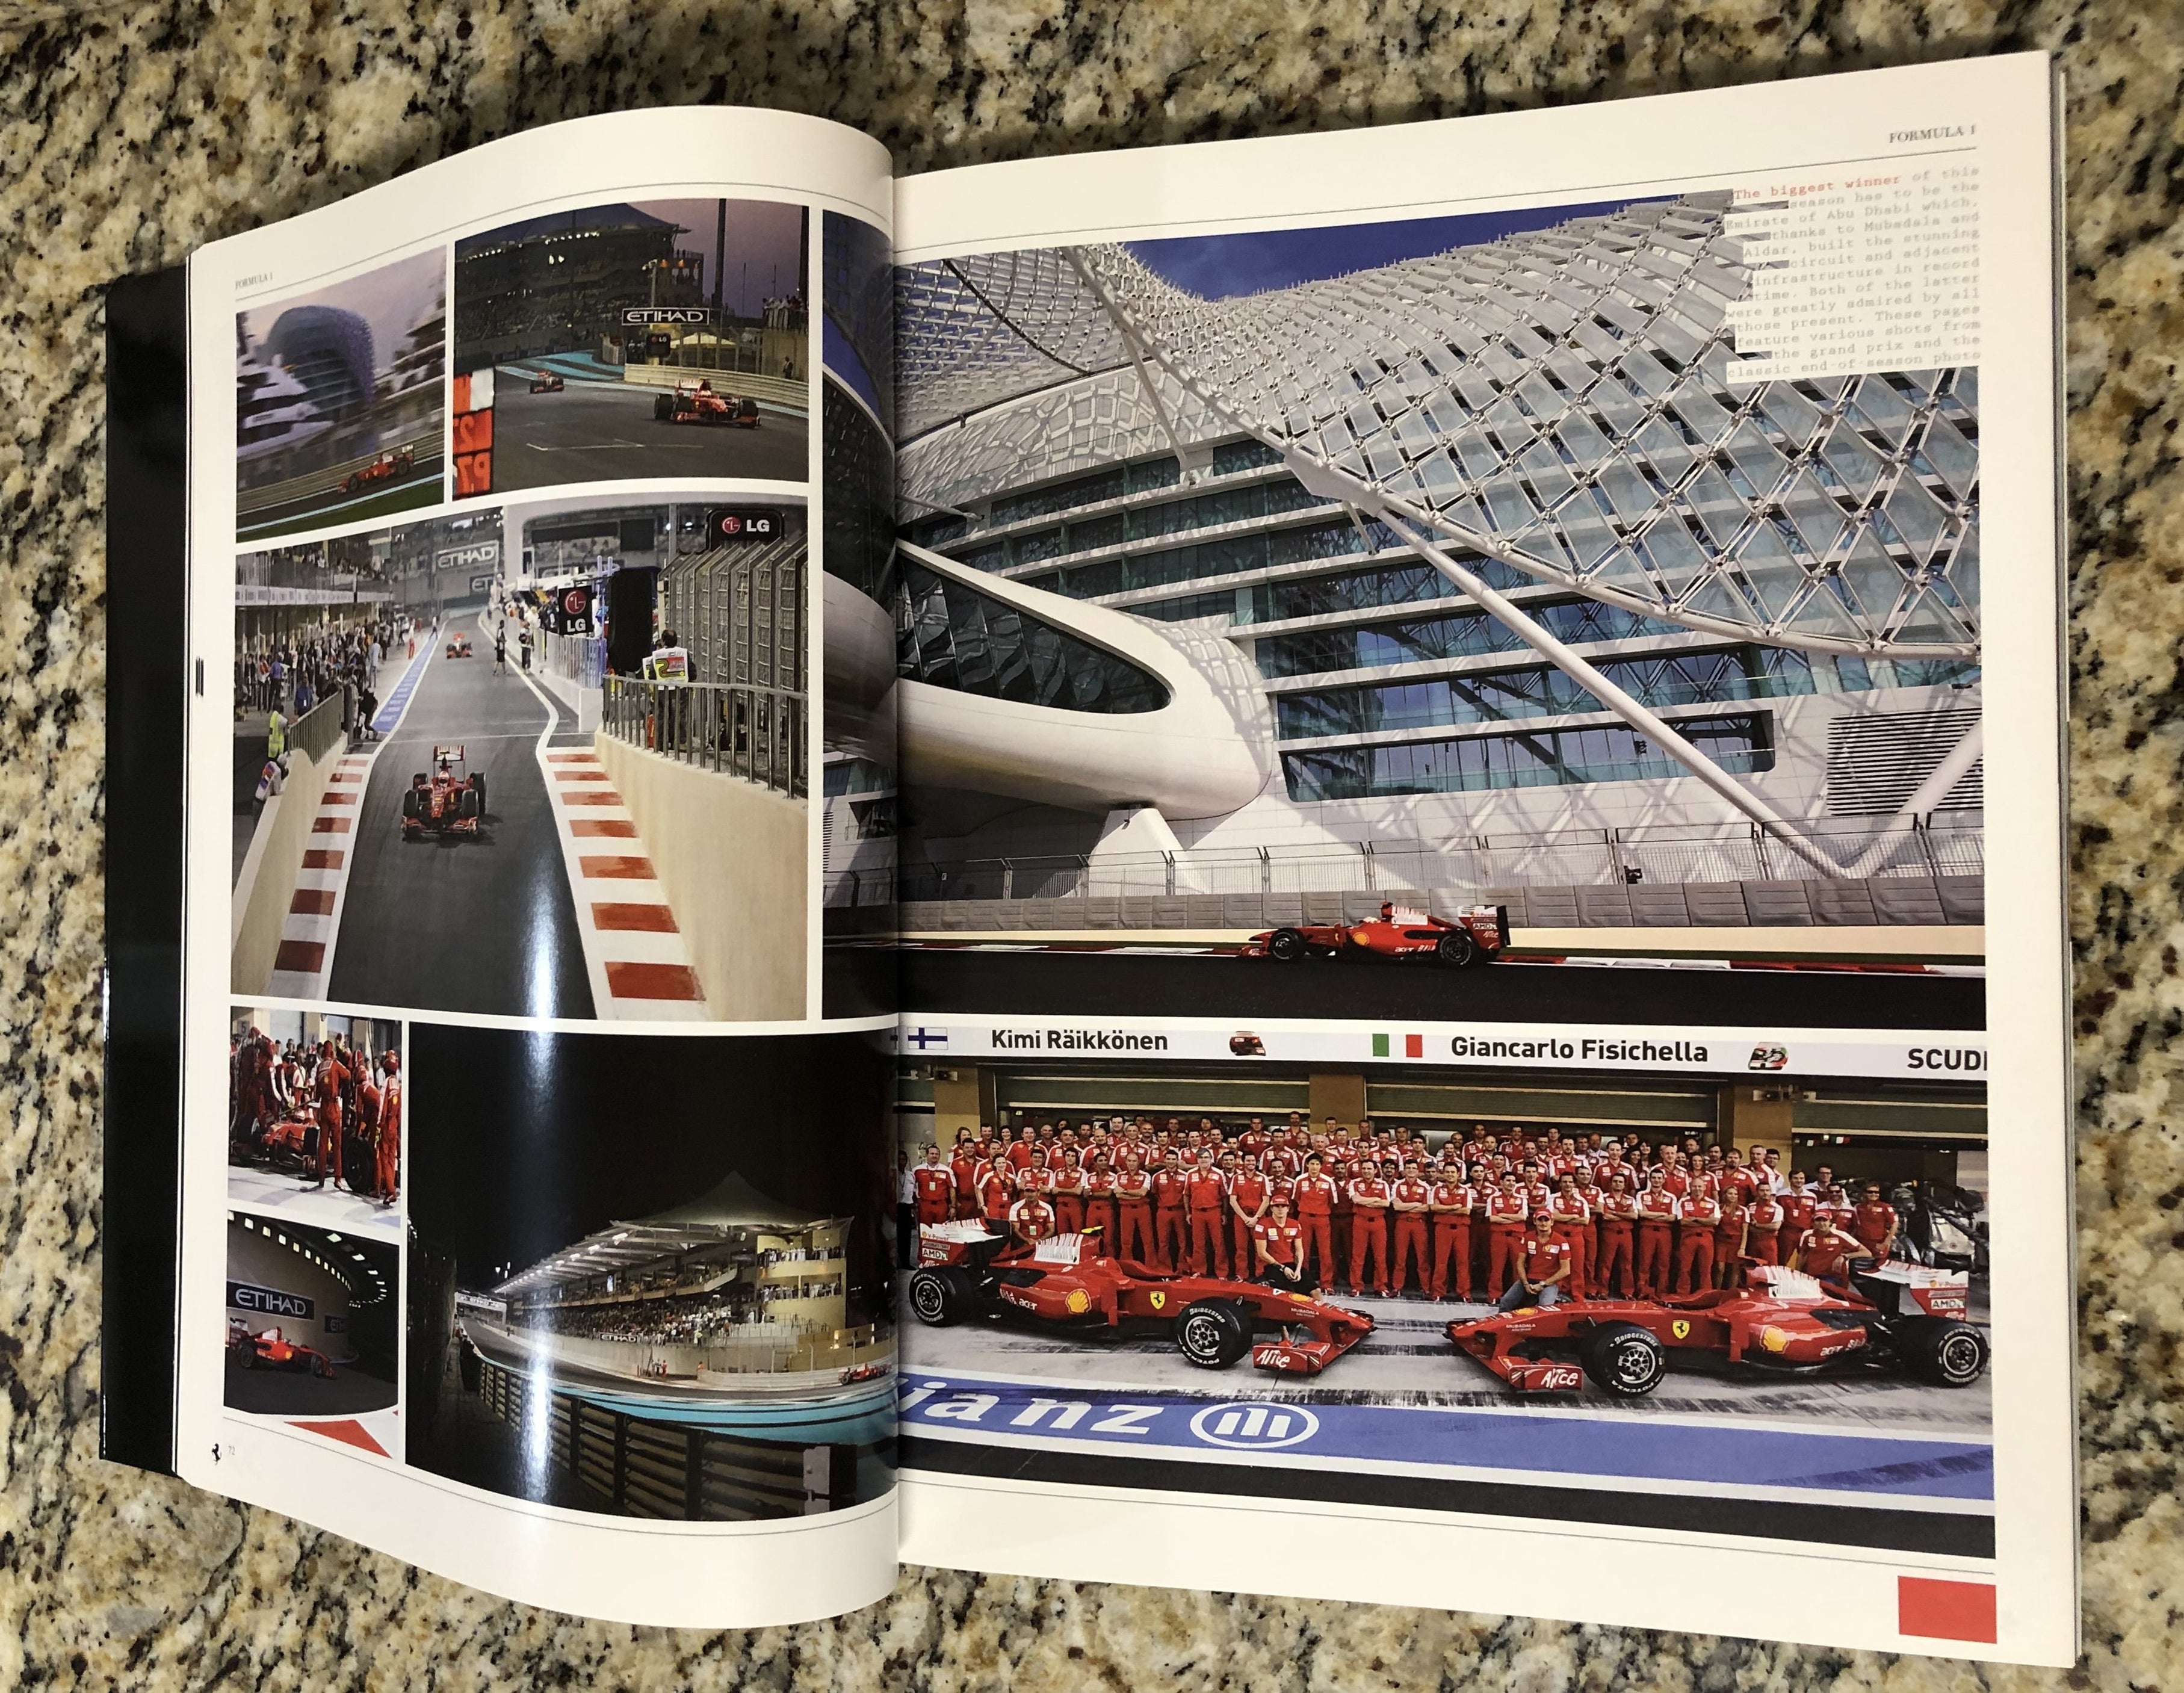 2009 Ferrari Yearbook